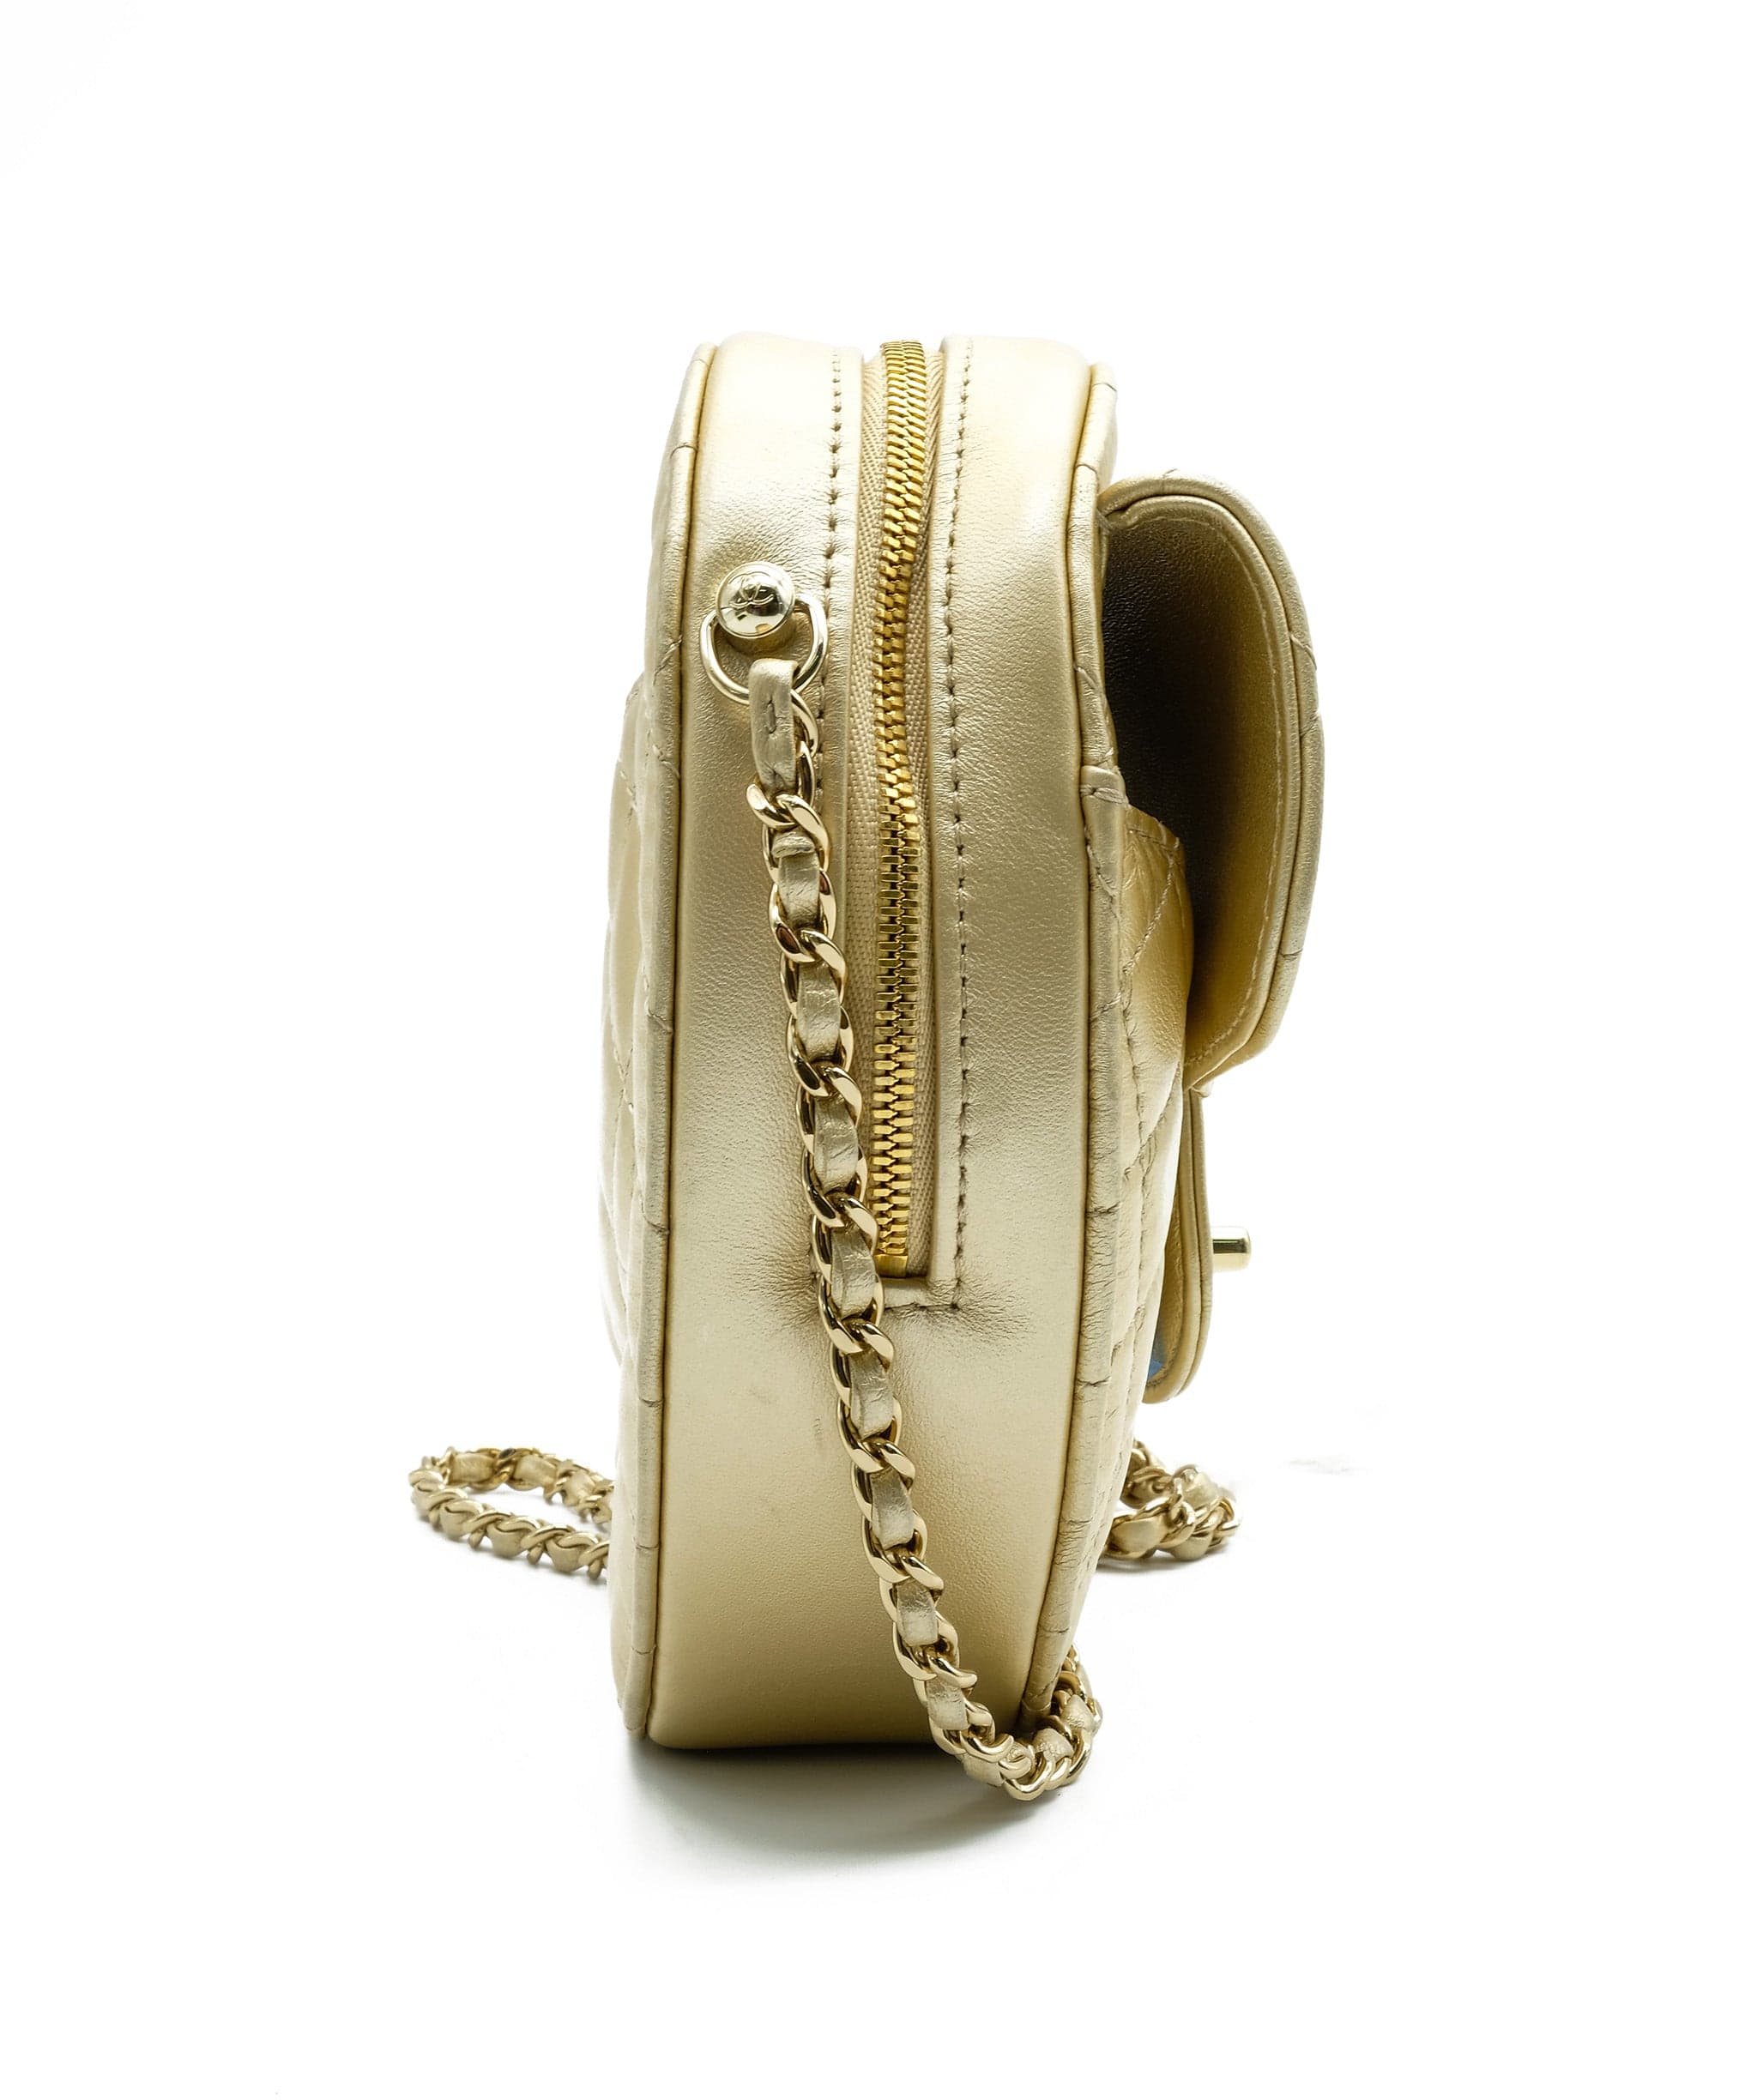 Chanel Chanel Heart Bag Gold RJC1362